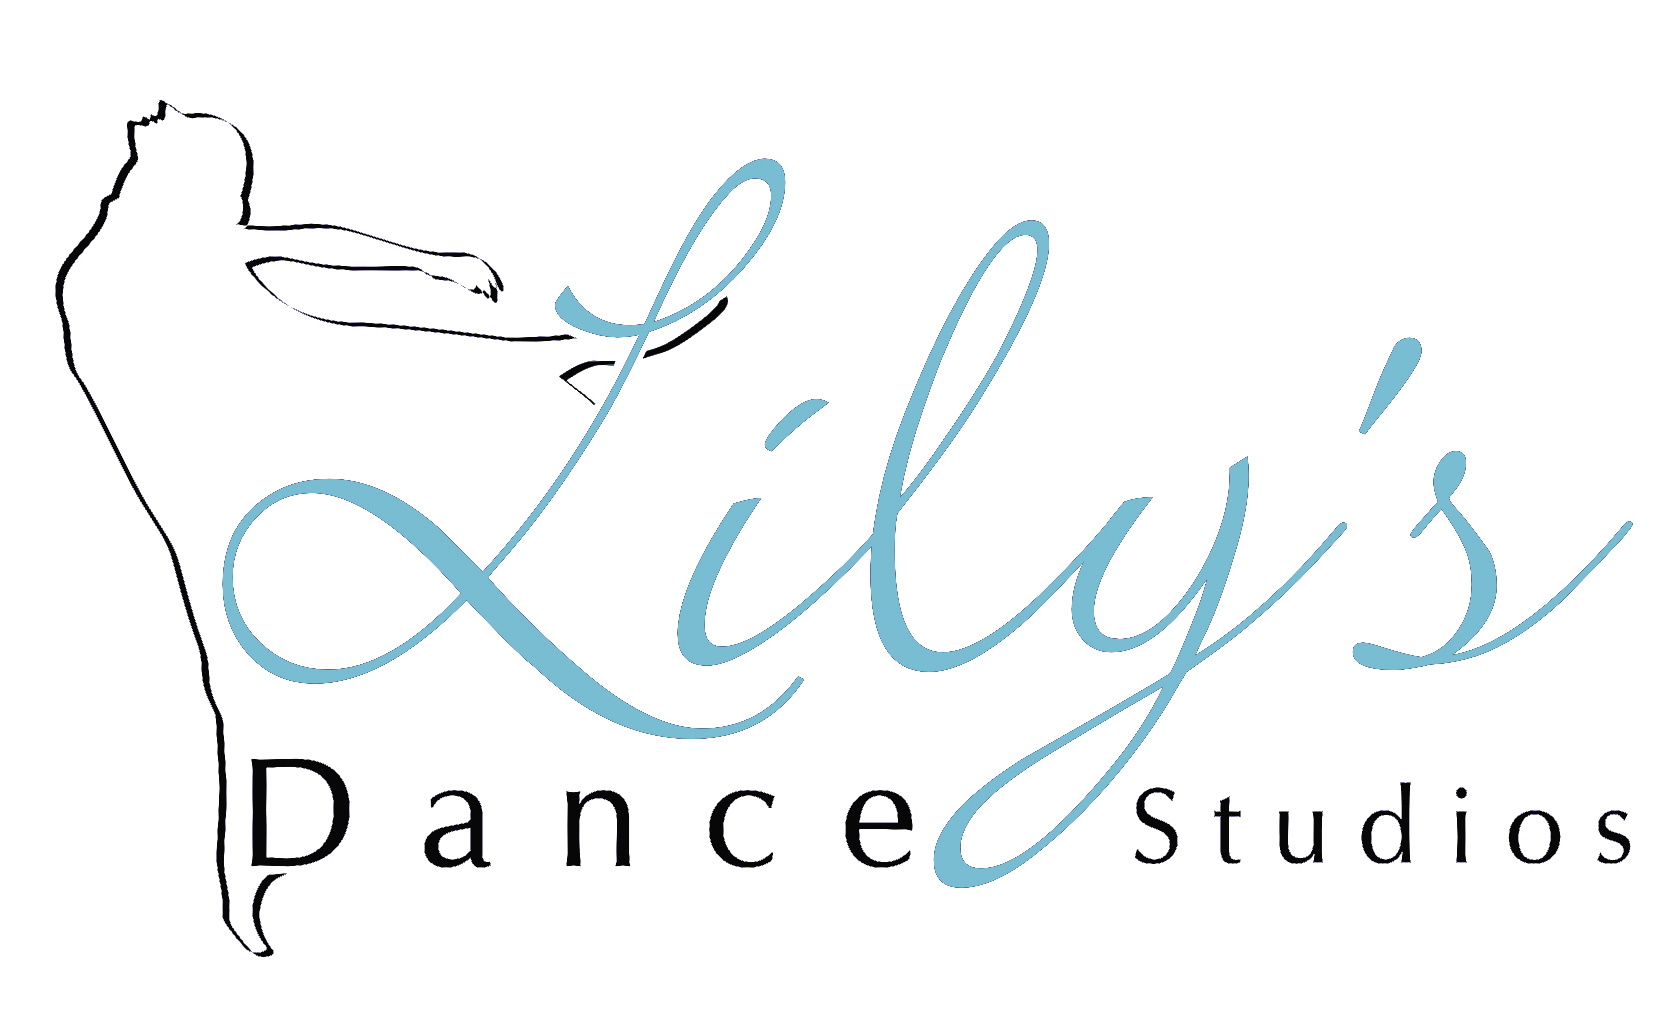 Dance school logo